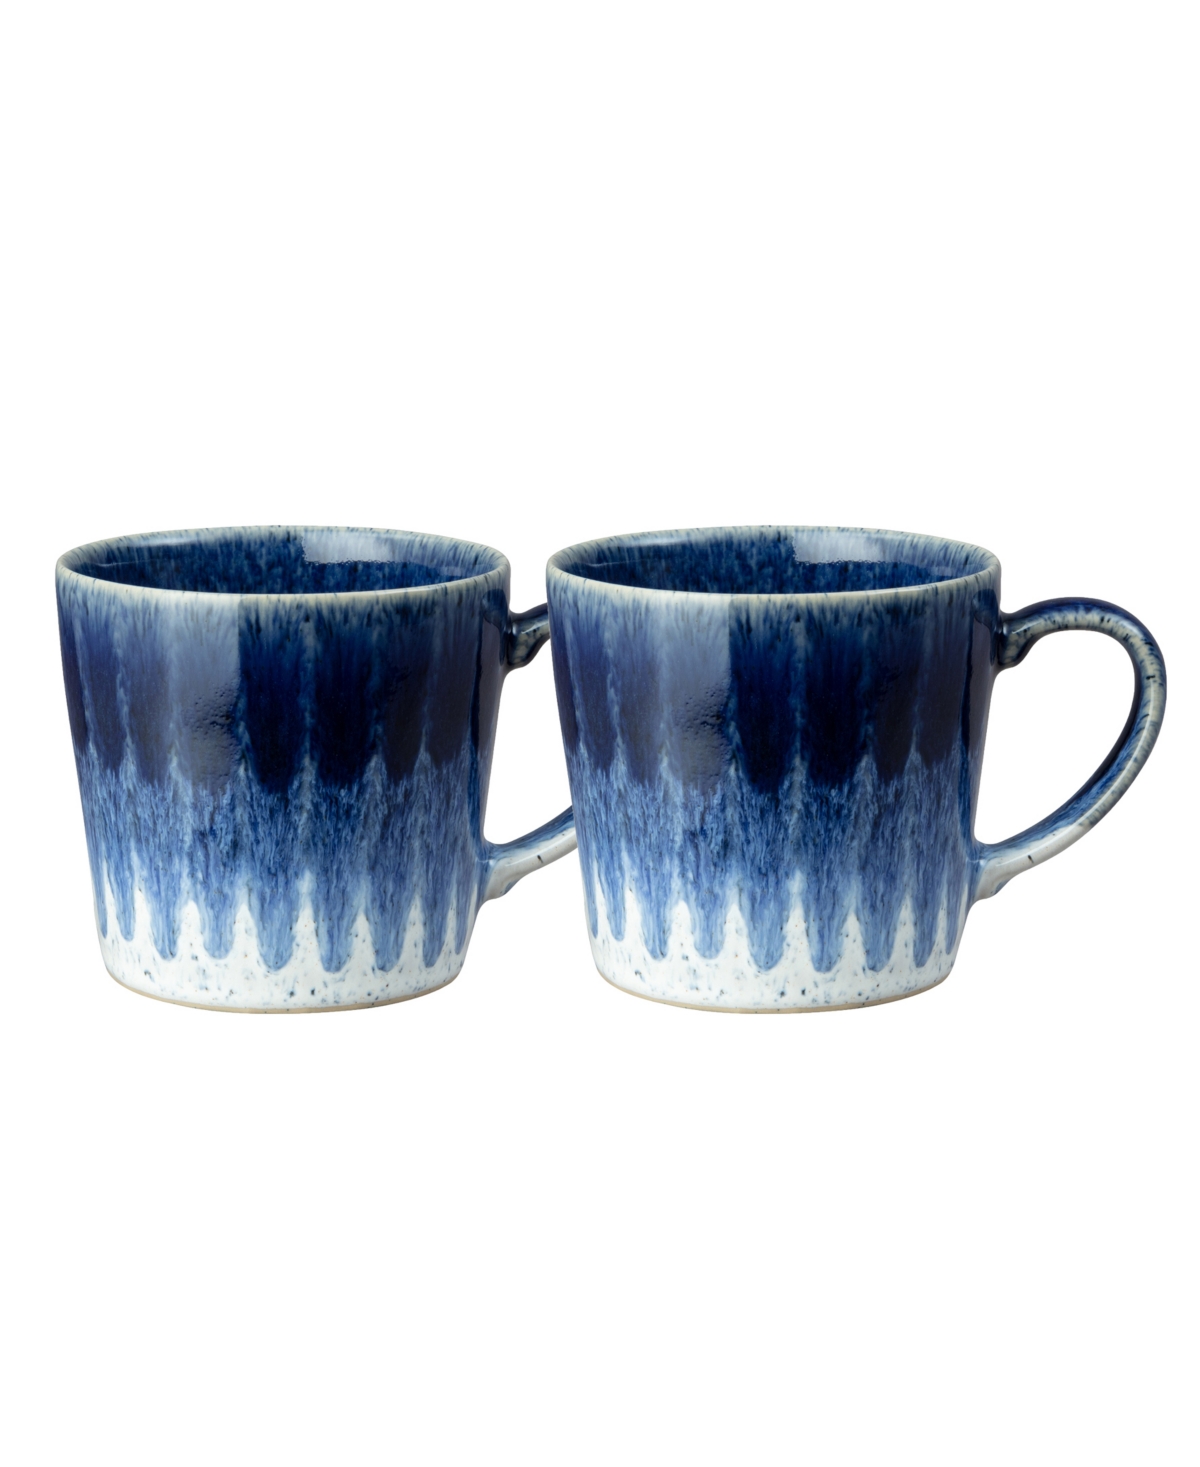 Denby Studio Blue Accent Set Of 2 Mugs, Service For 2